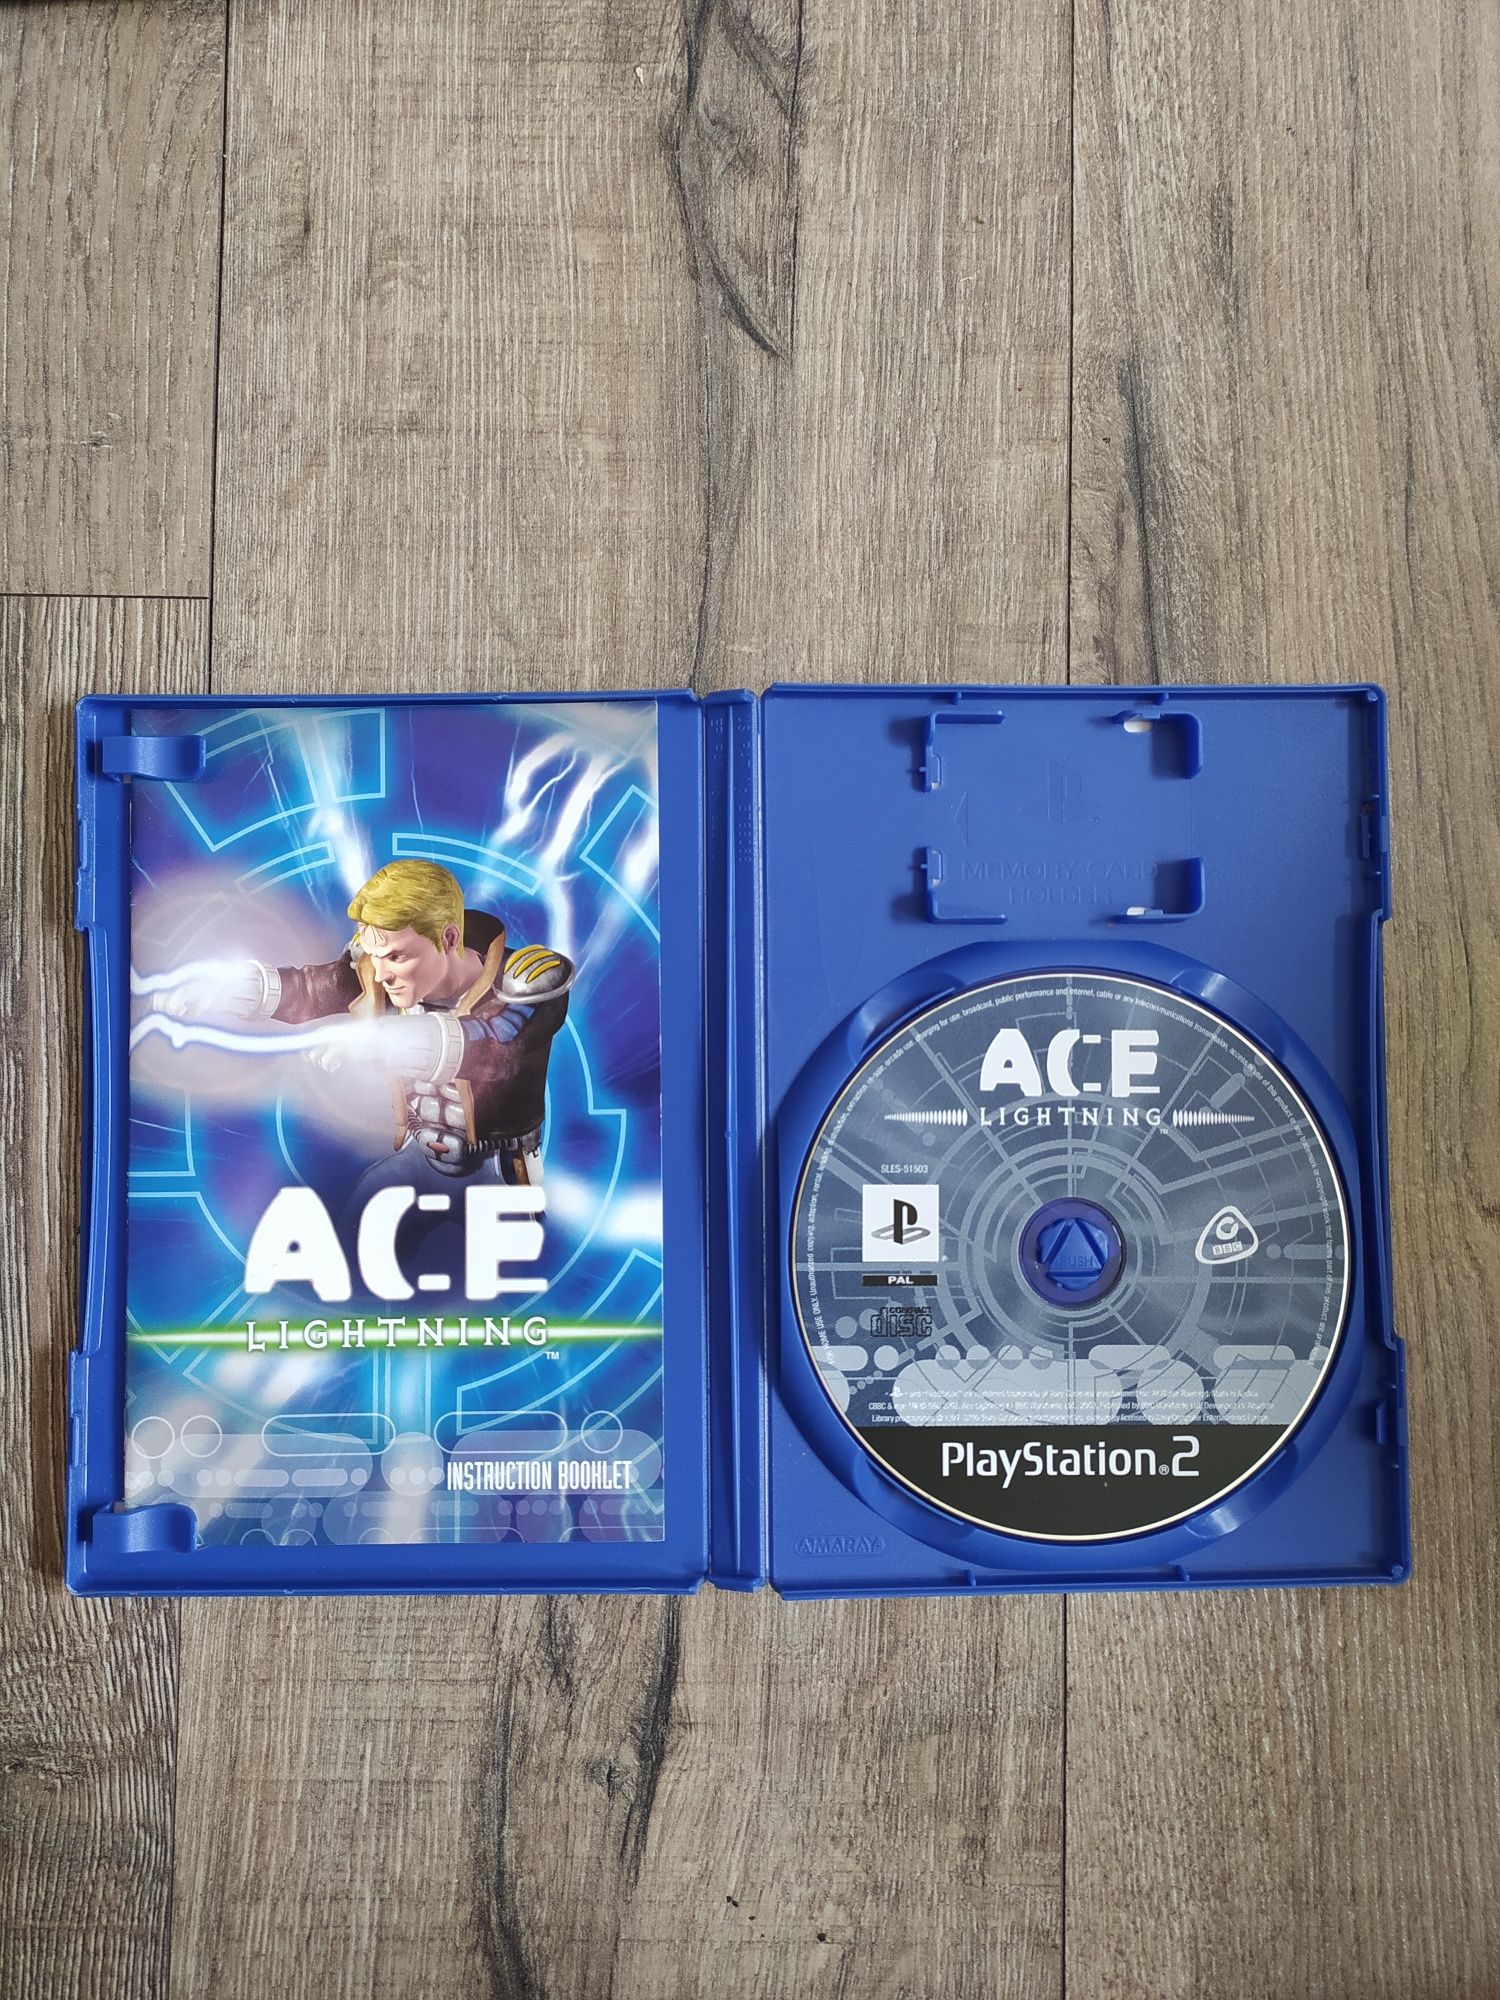 Gra PS2 Ace Lightning Wysyłka